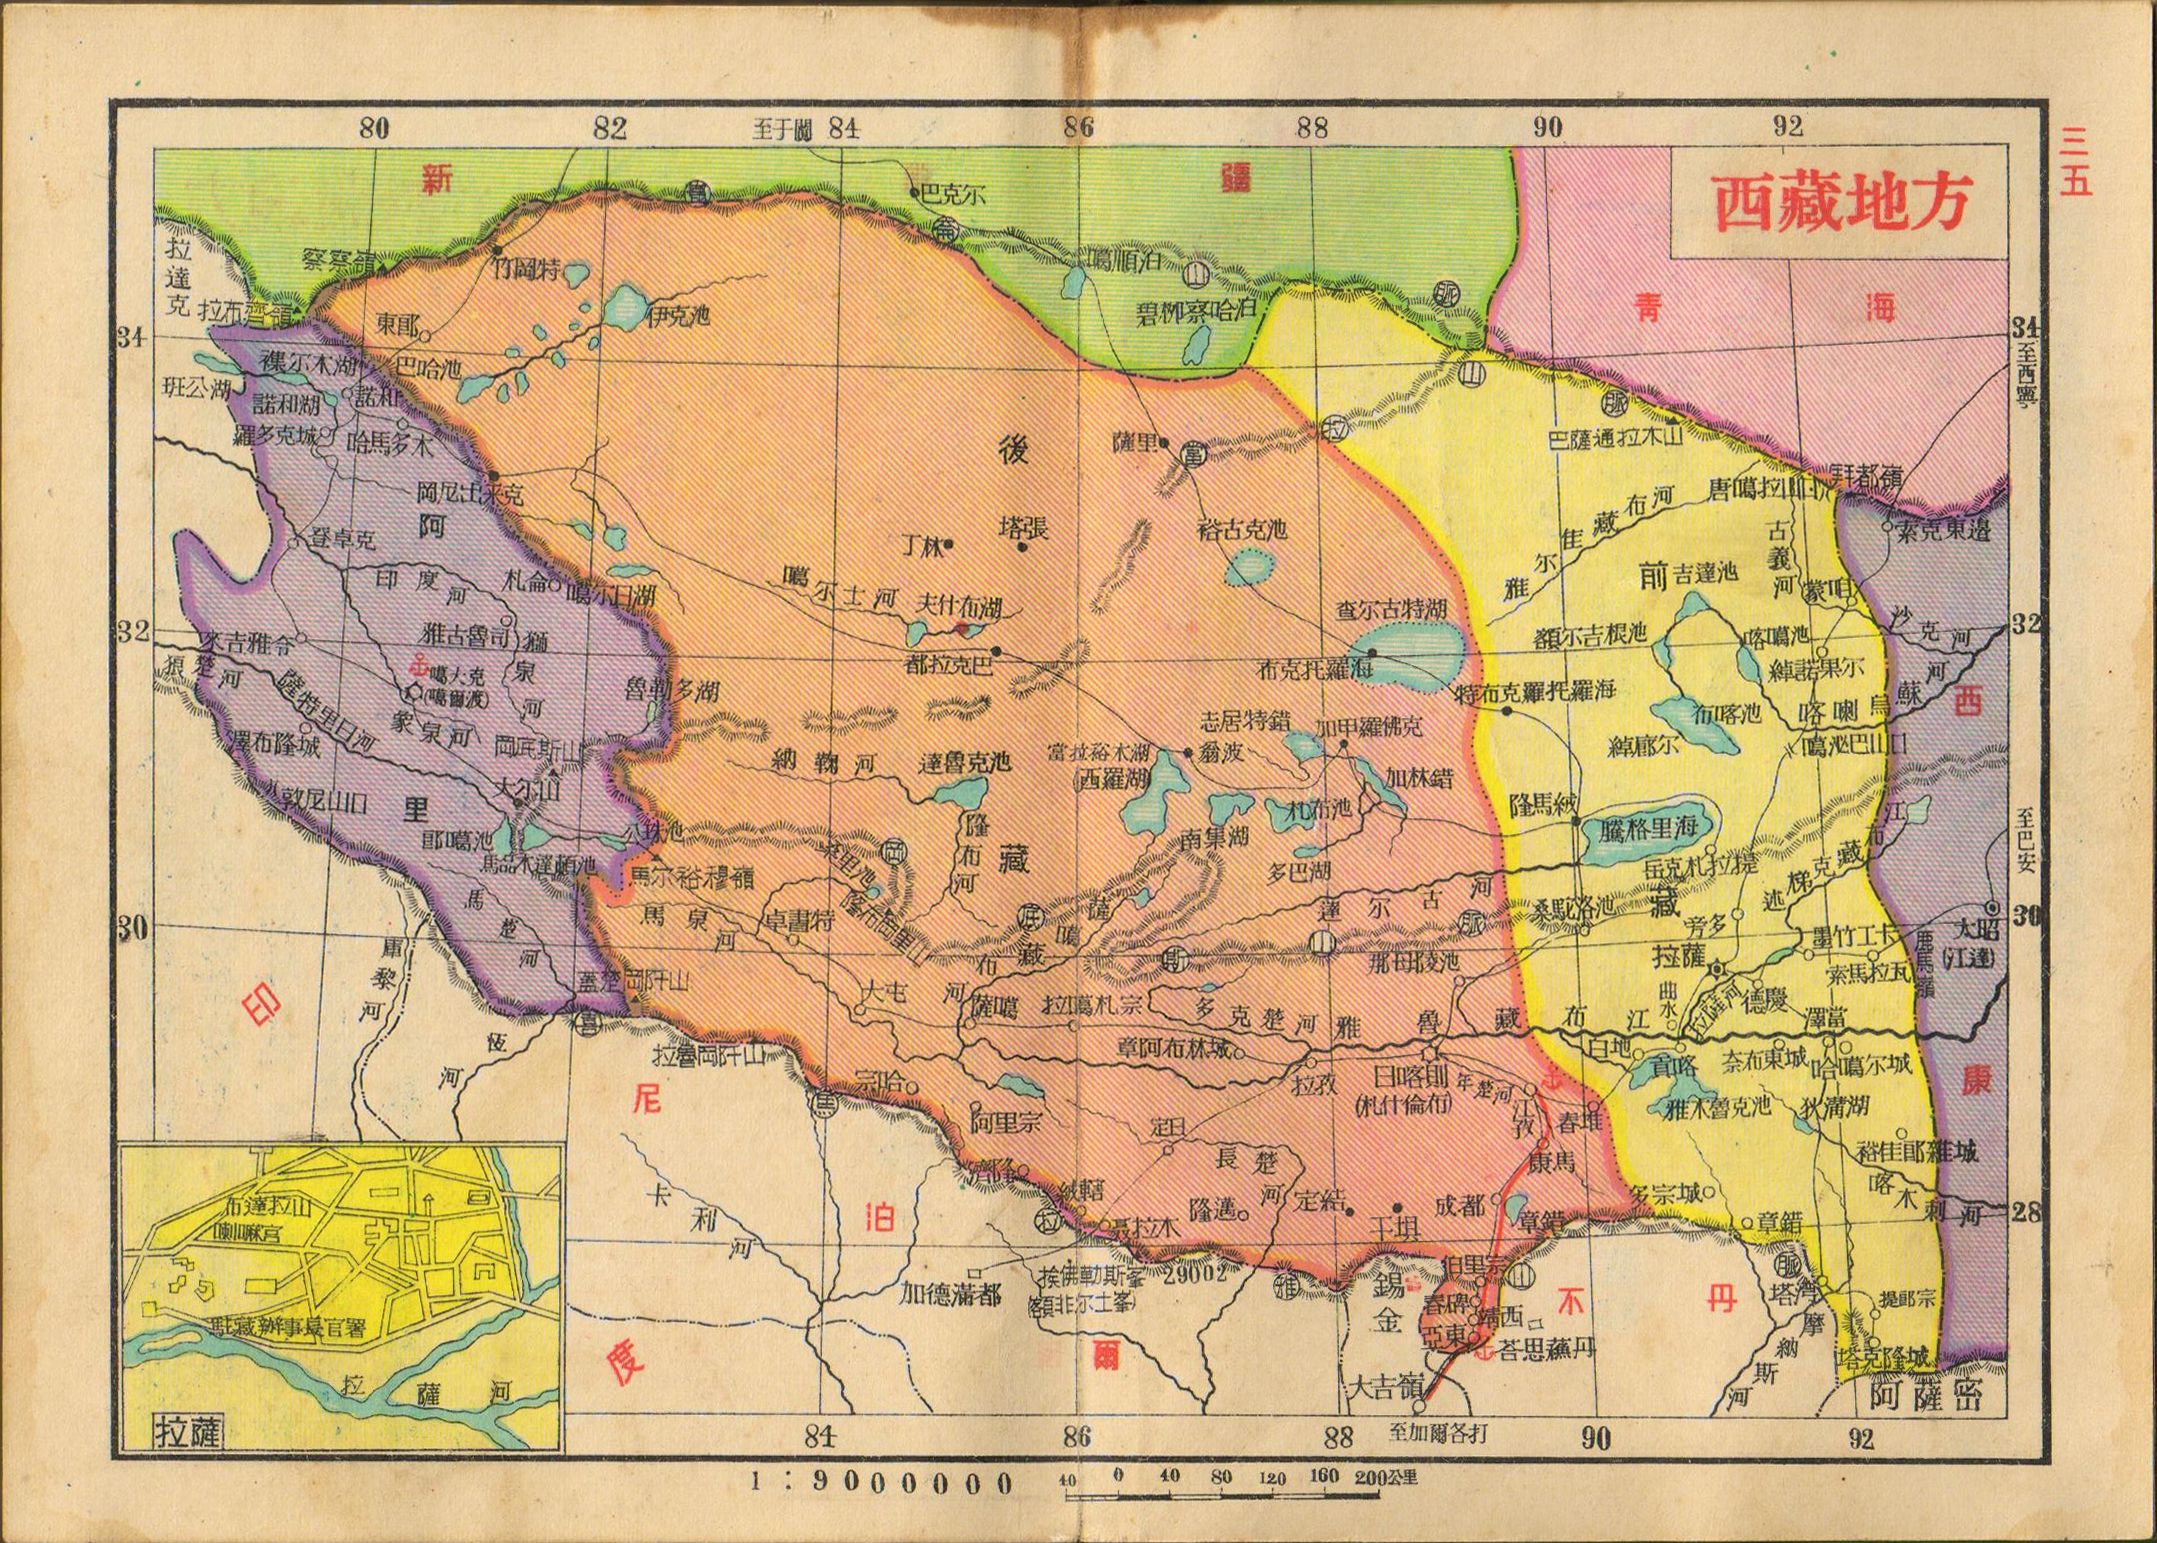 File:亚新地学社1936年《袖珍中华全图》--35西藏地方.jpg - Wikimedia